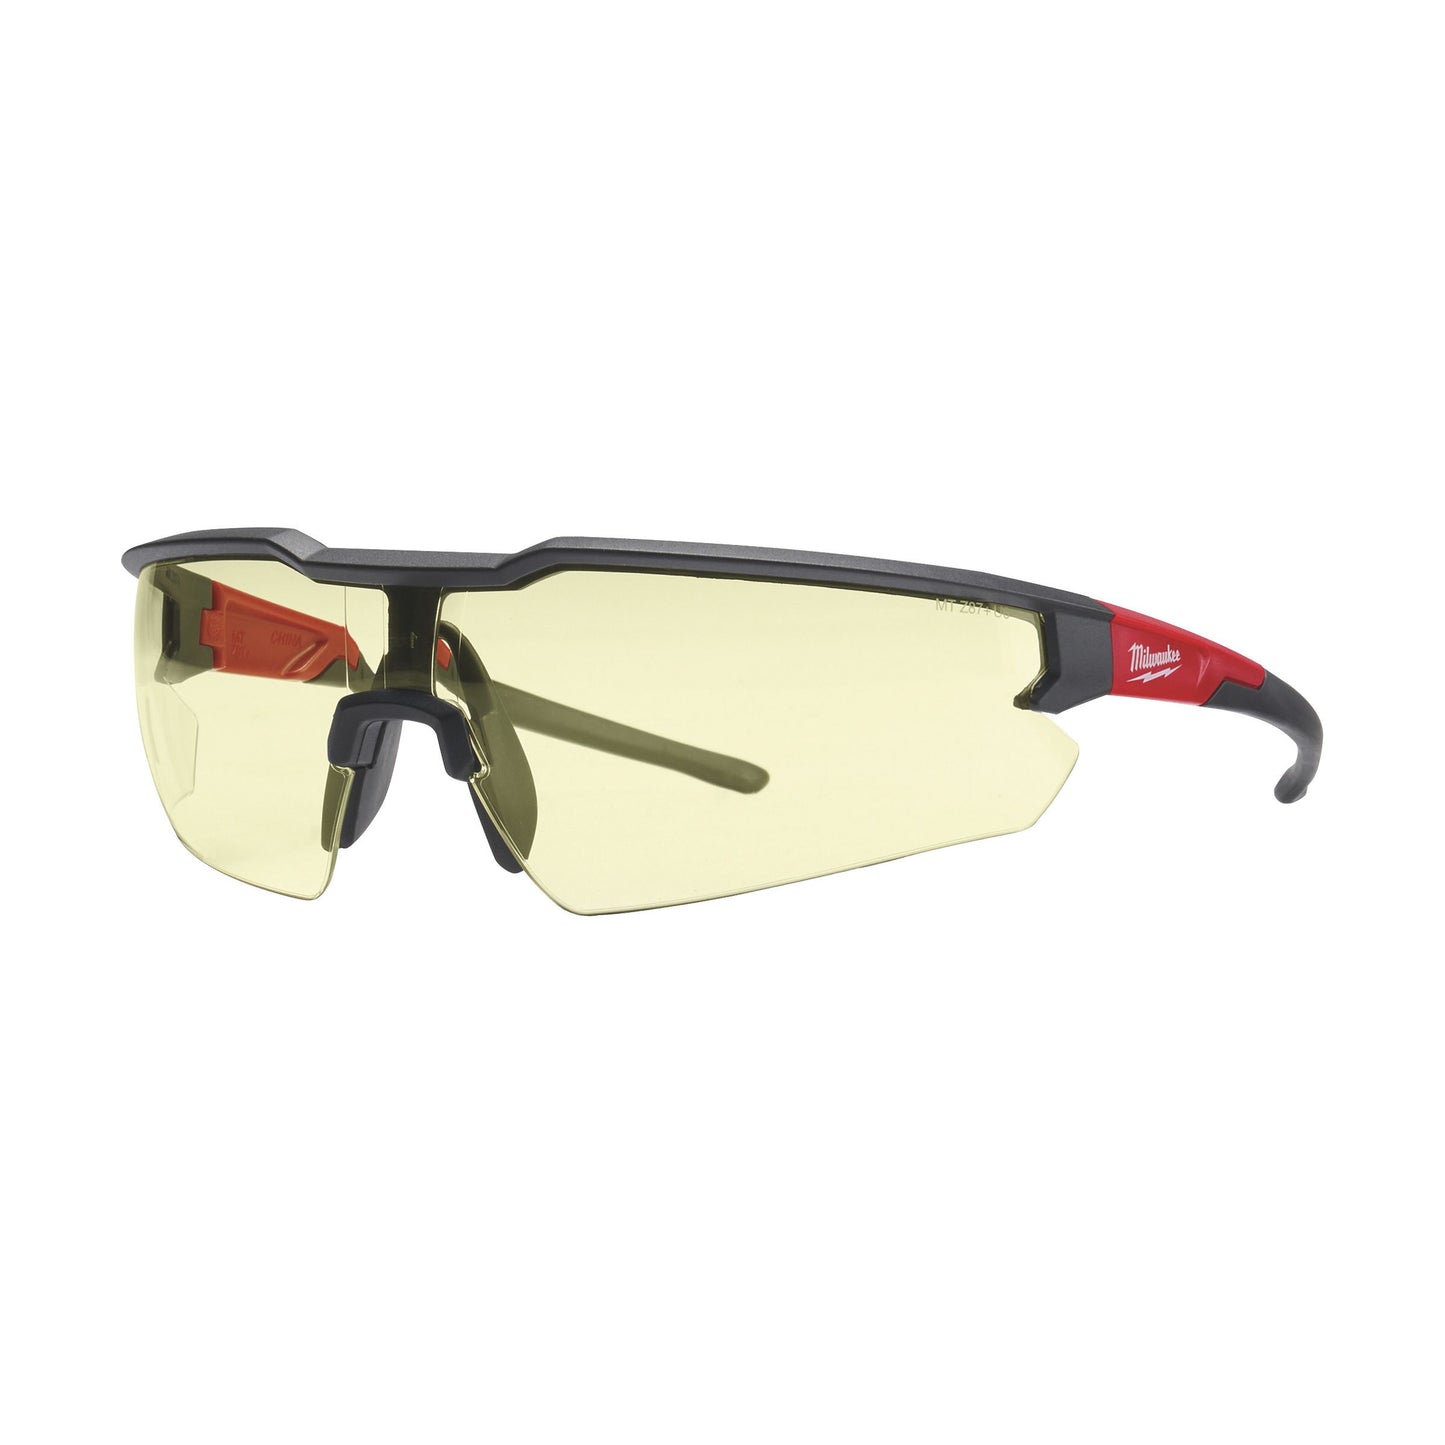 48-73-2102 - Safety Glasses - Yellow Fog-Free Lenses